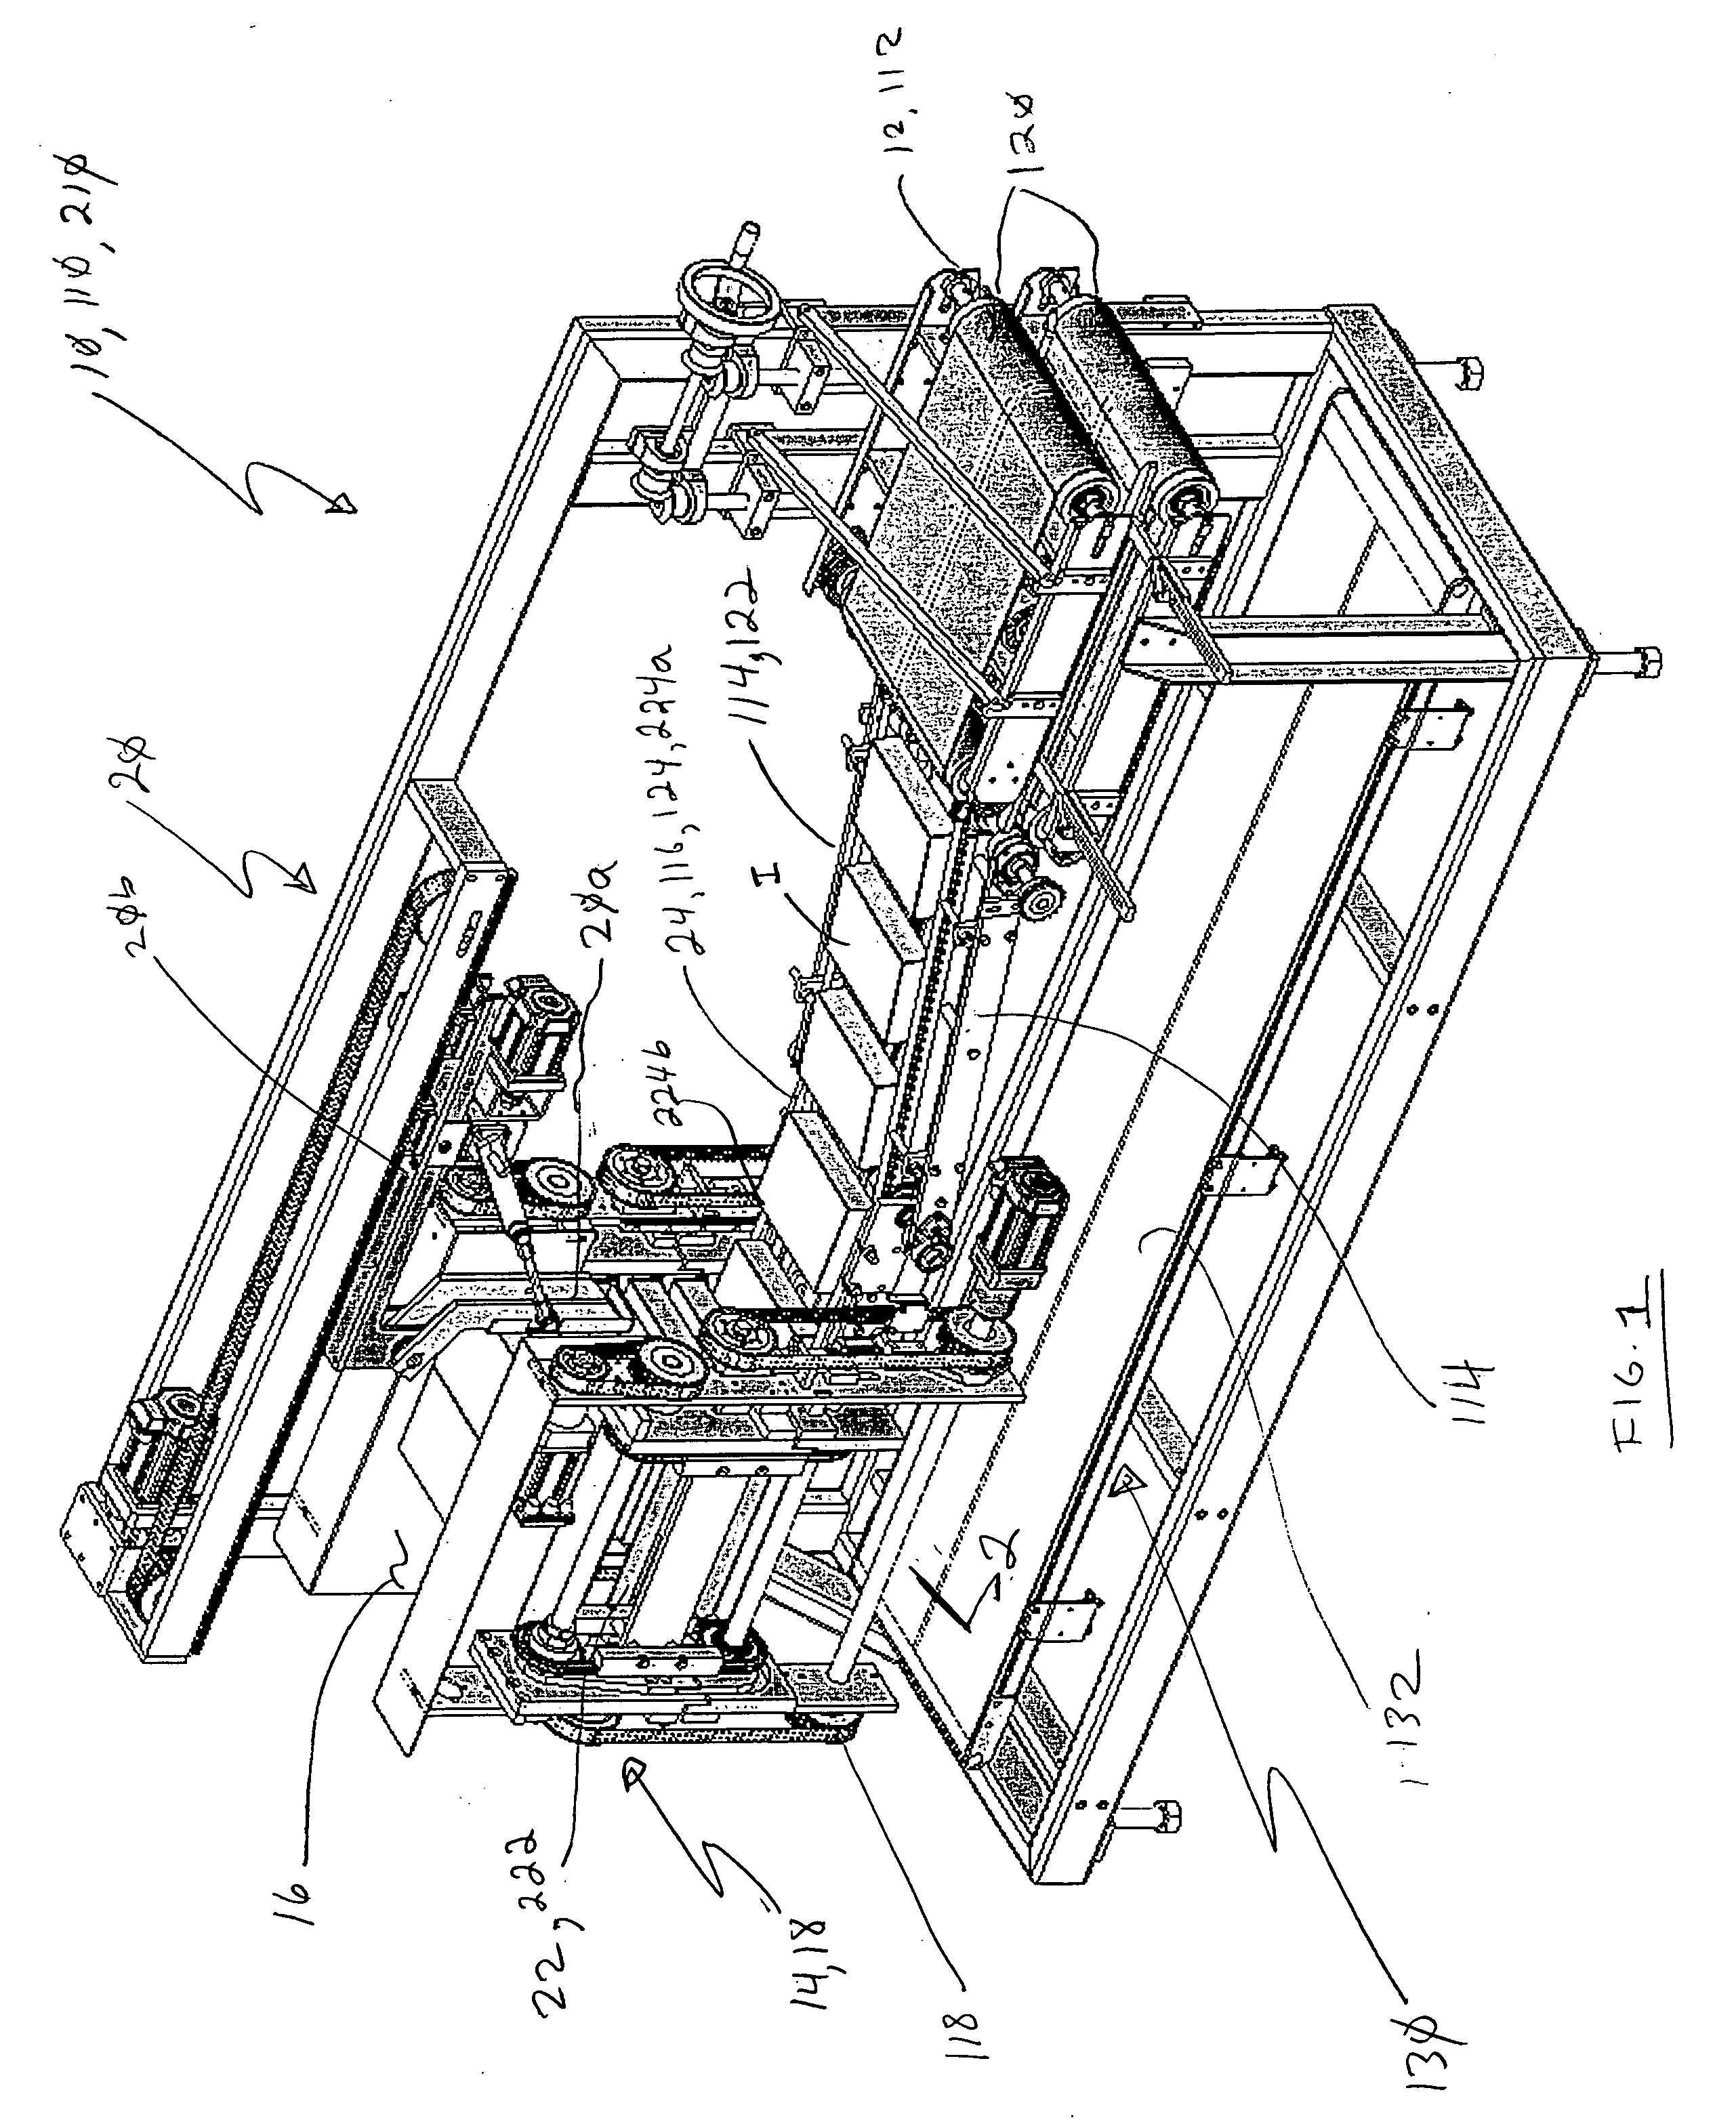 Carton stacking apparatus and method